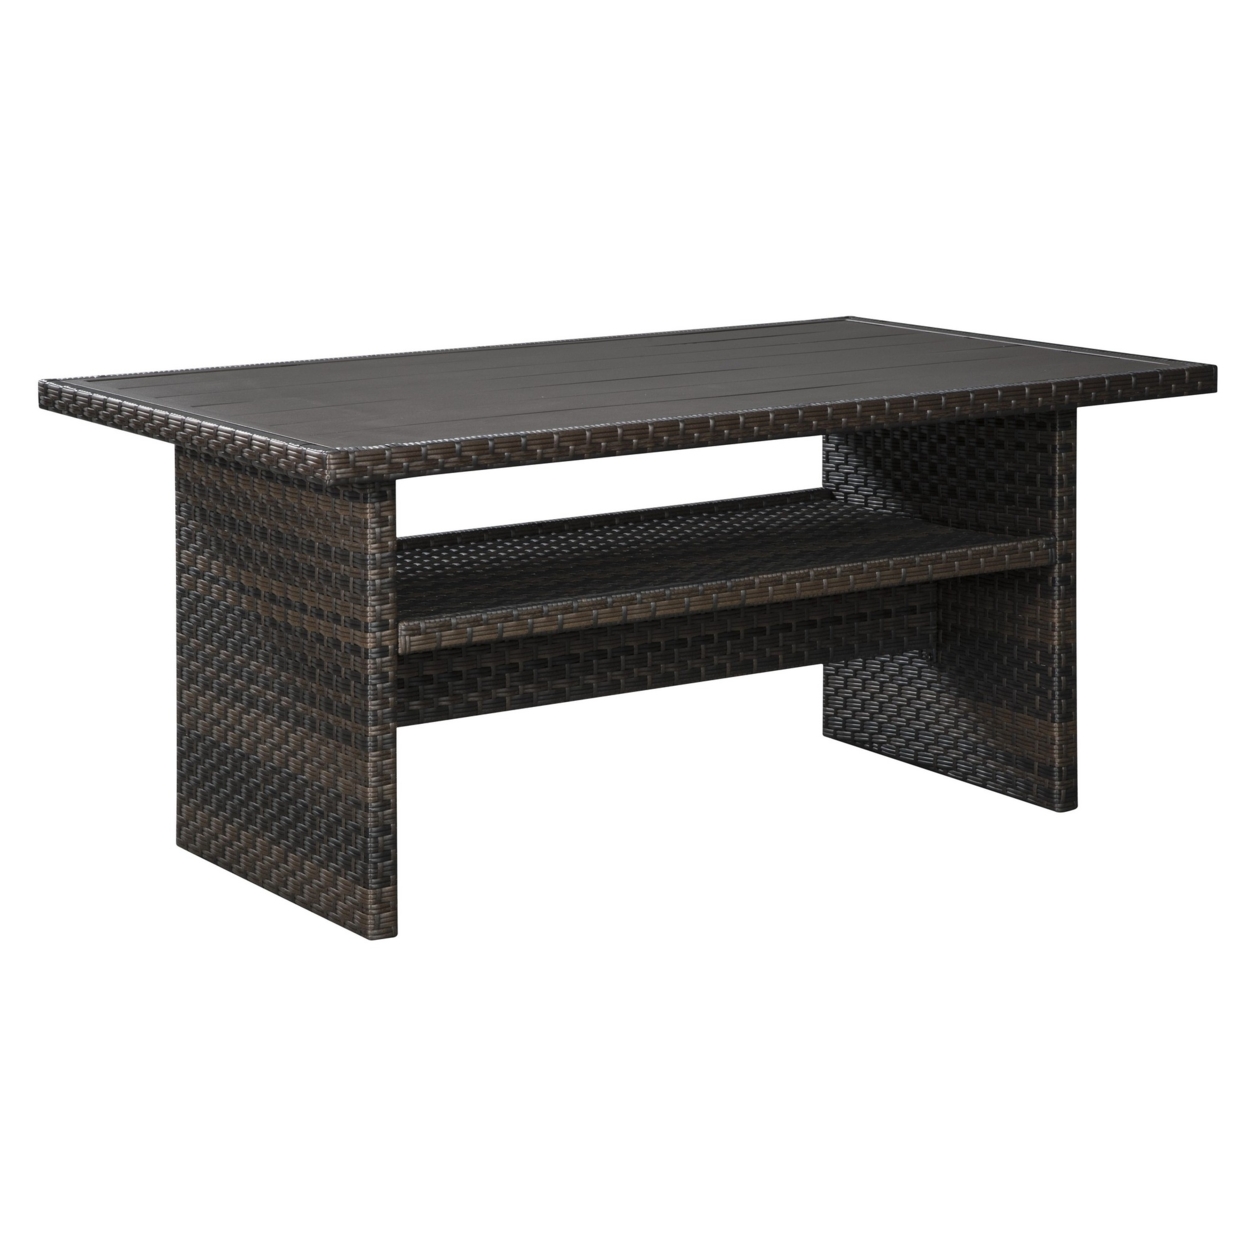 Rectangular Wicker Woven Aluminum Frame Table With Open Shelf, Dark Brown- Saltoro Sherpi